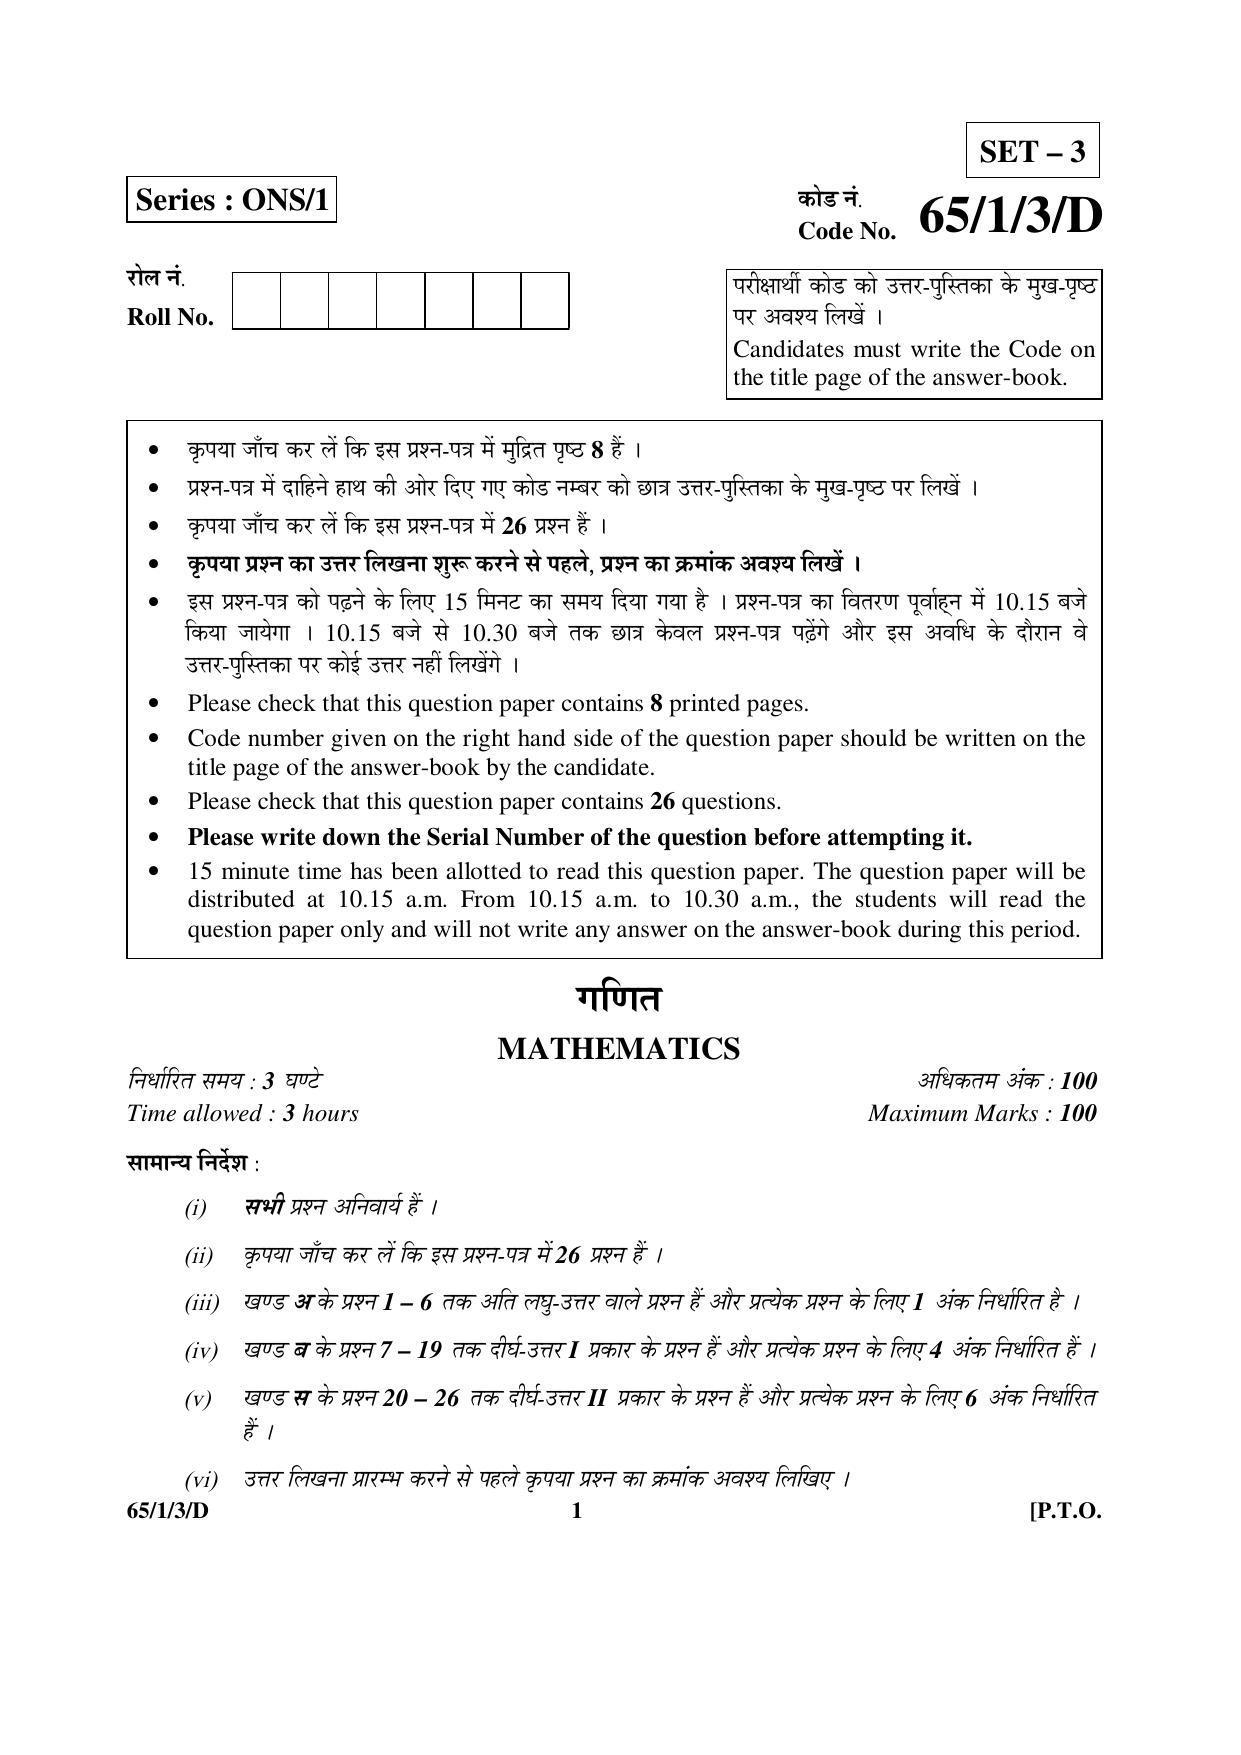 CBSE Class 12 65-1-3-D MATHEMATICS 2016 Question Paper - Page 1